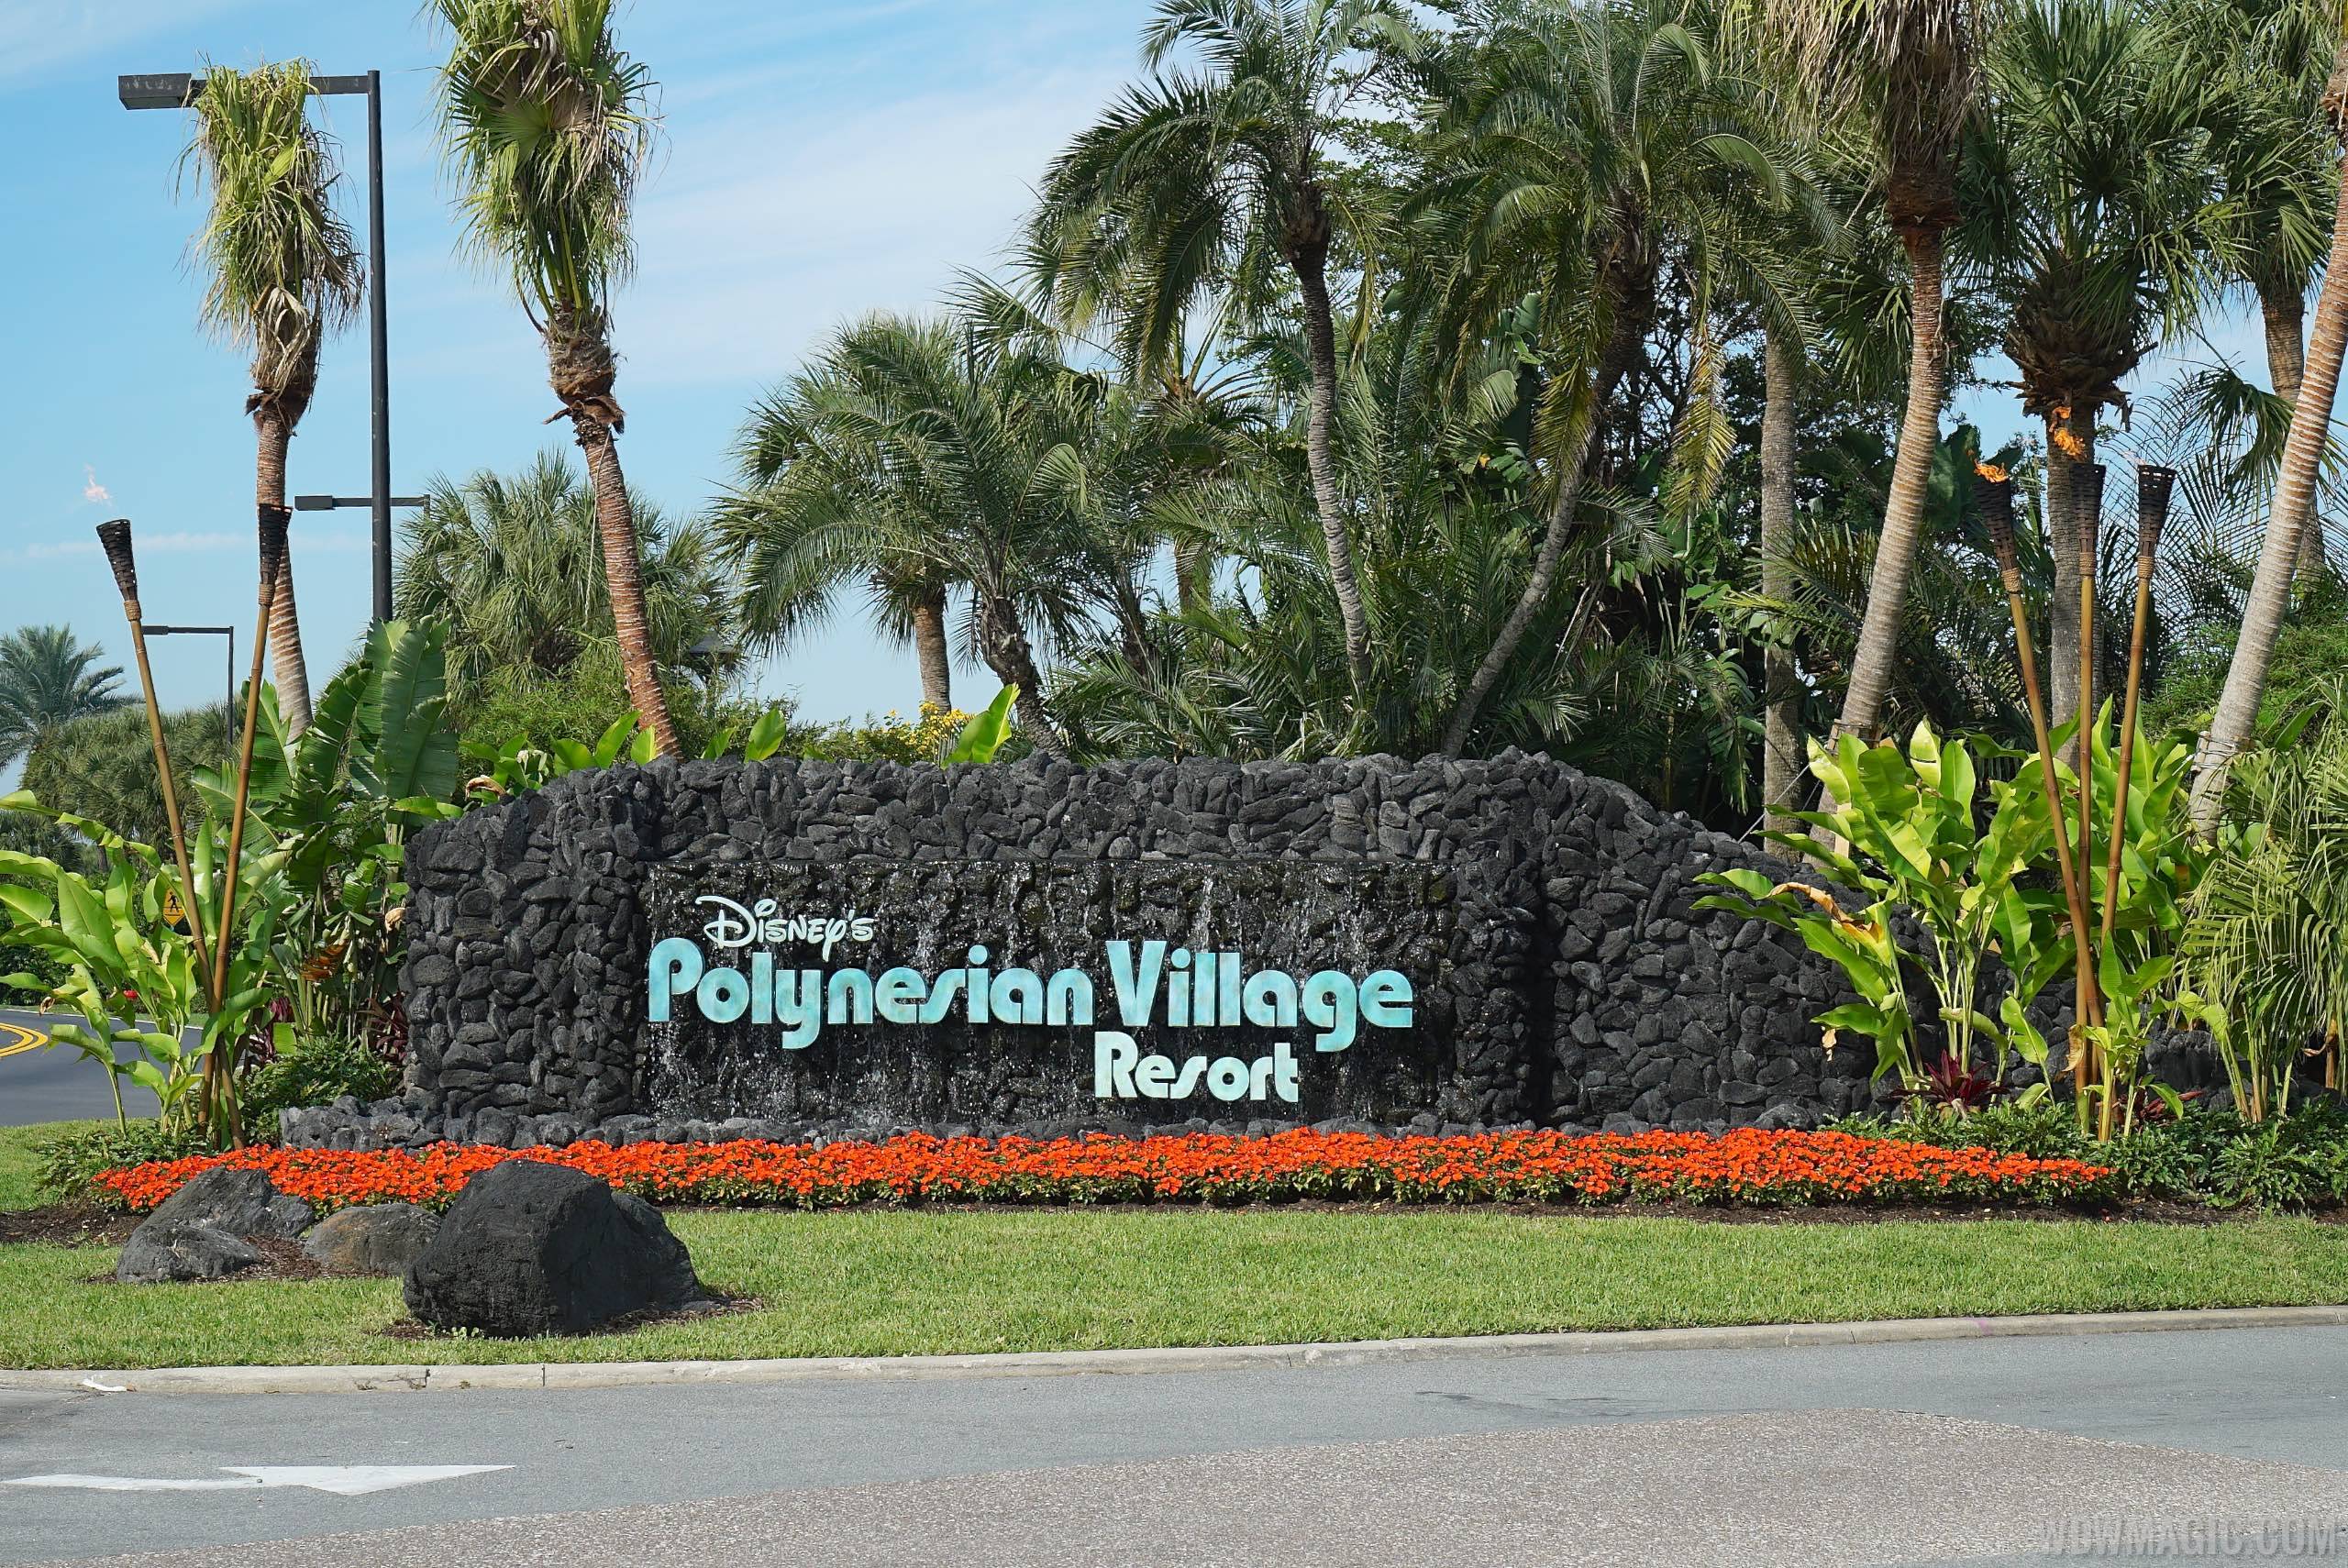 Polynesian Village Resort main entrance sign